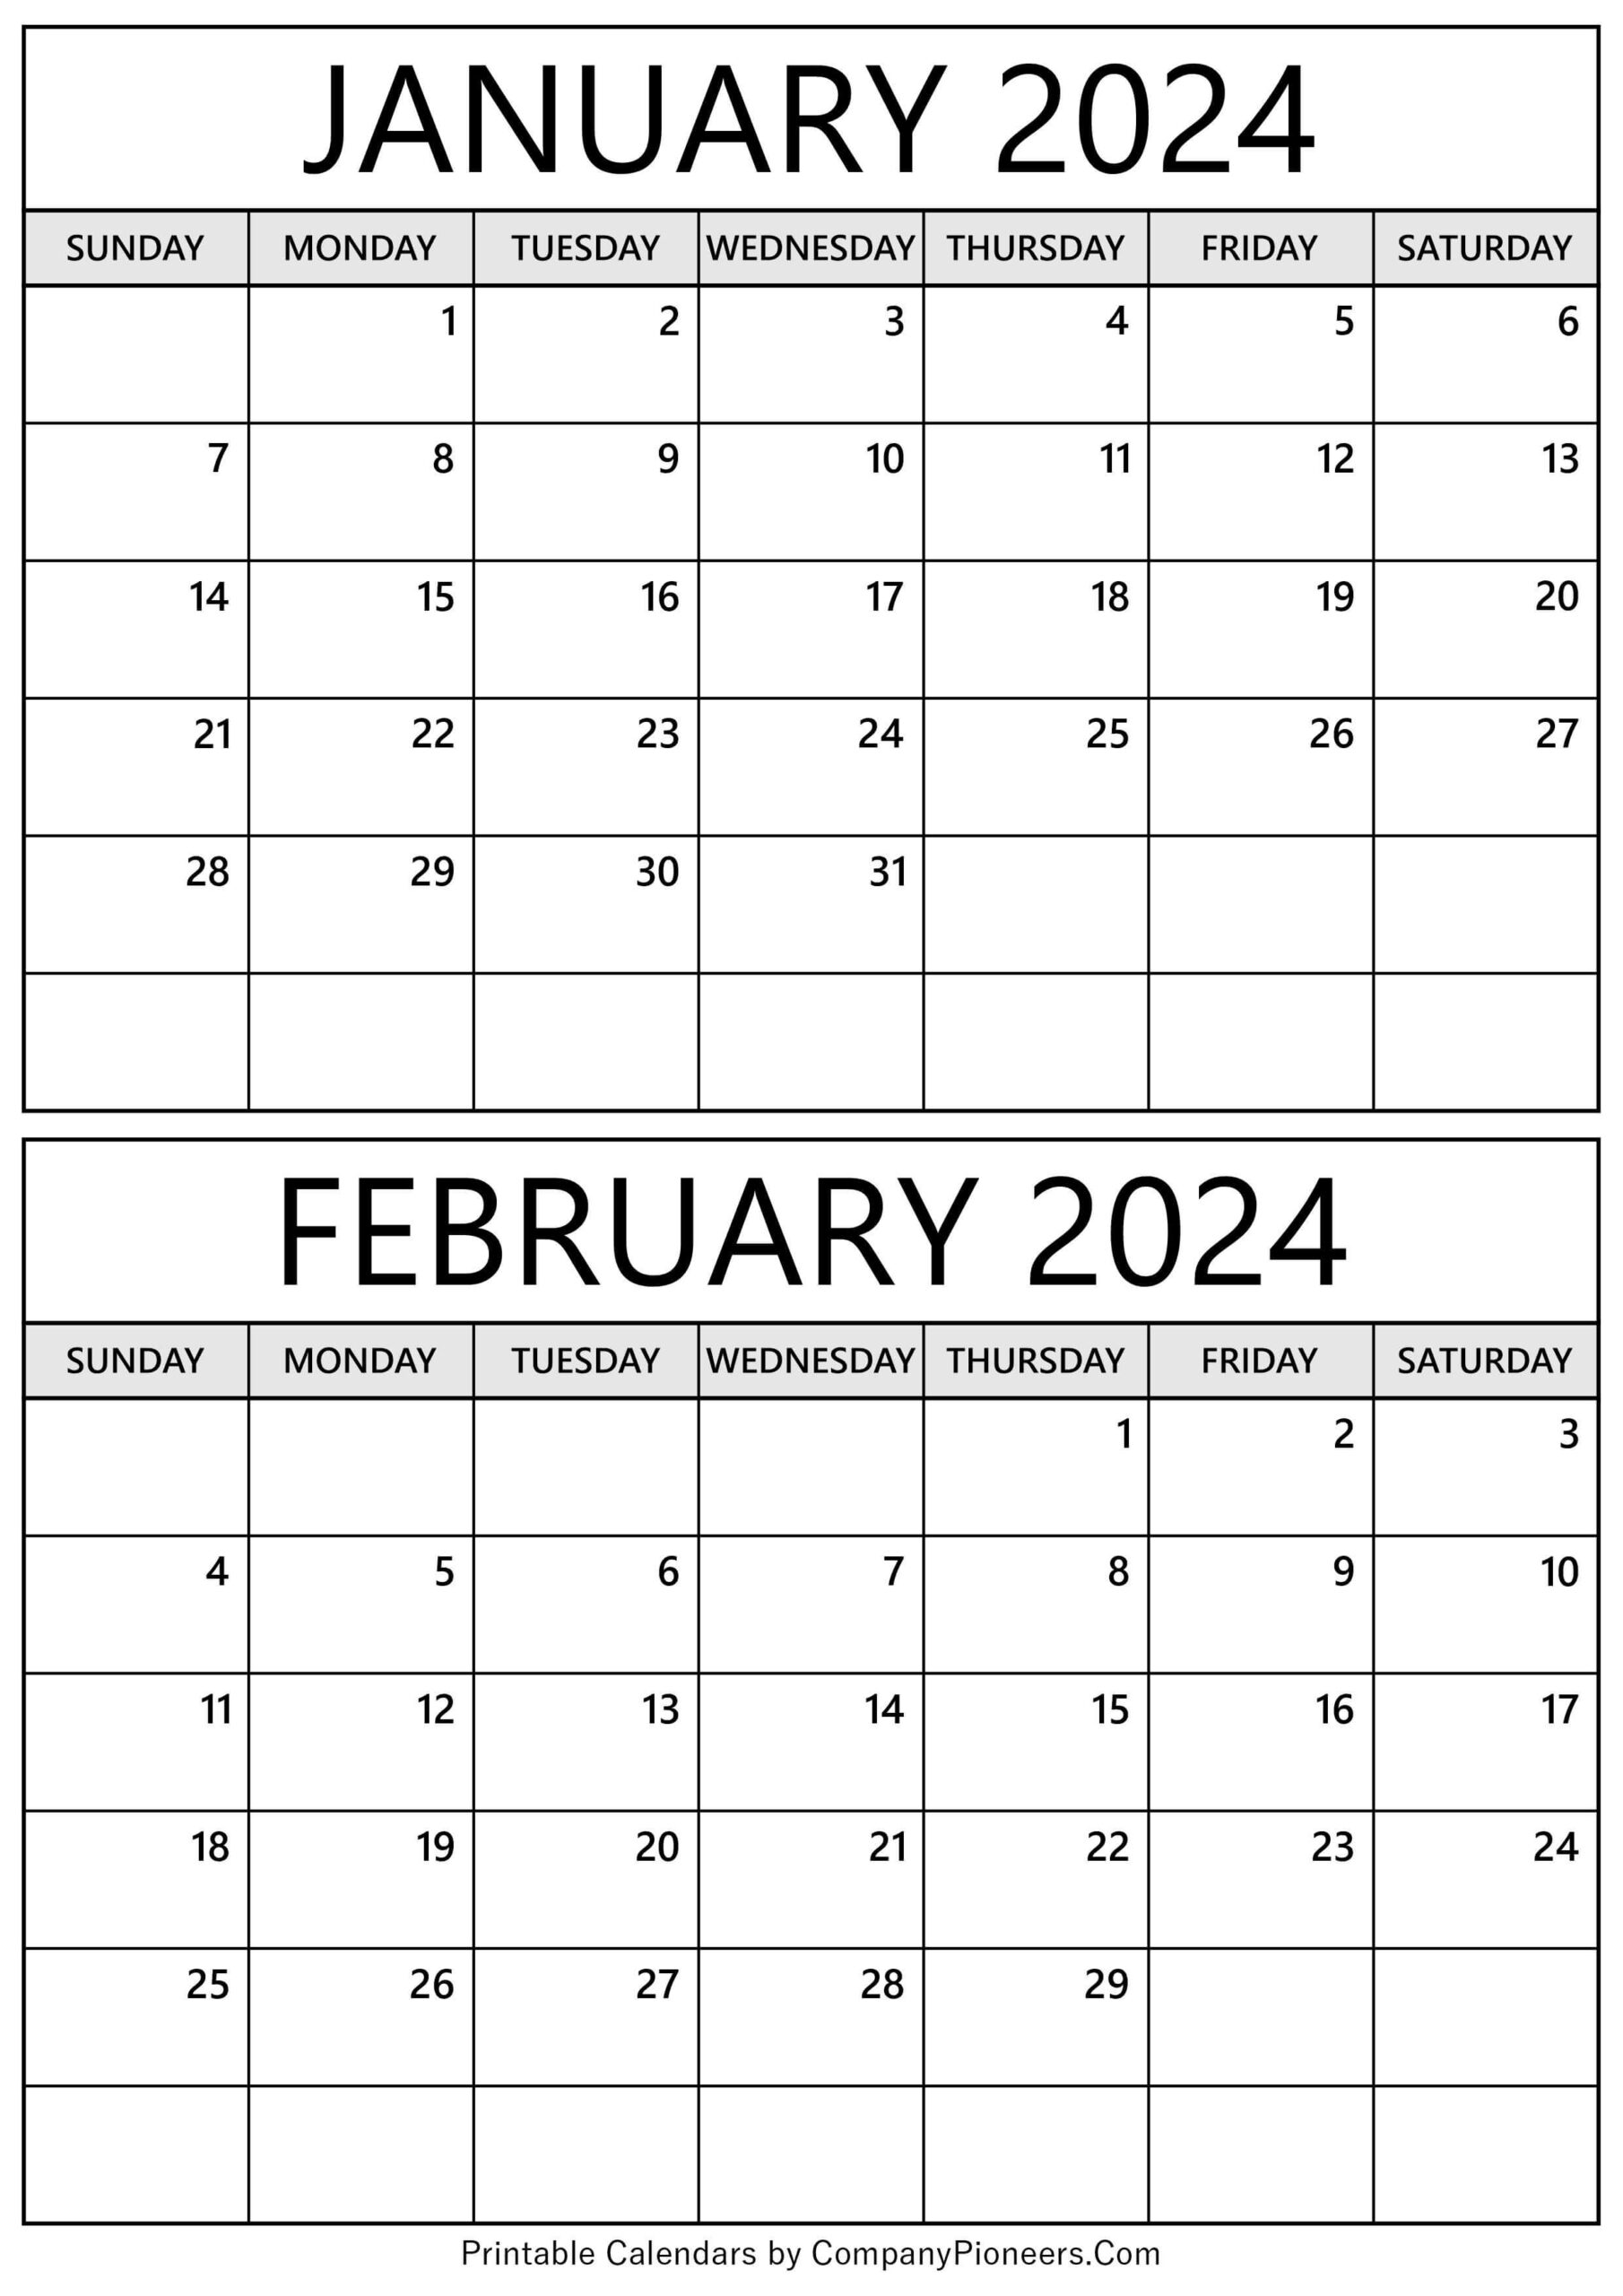 January February 2024 Calendar Printable - Template for Printable Calendar Jan Feb 2024